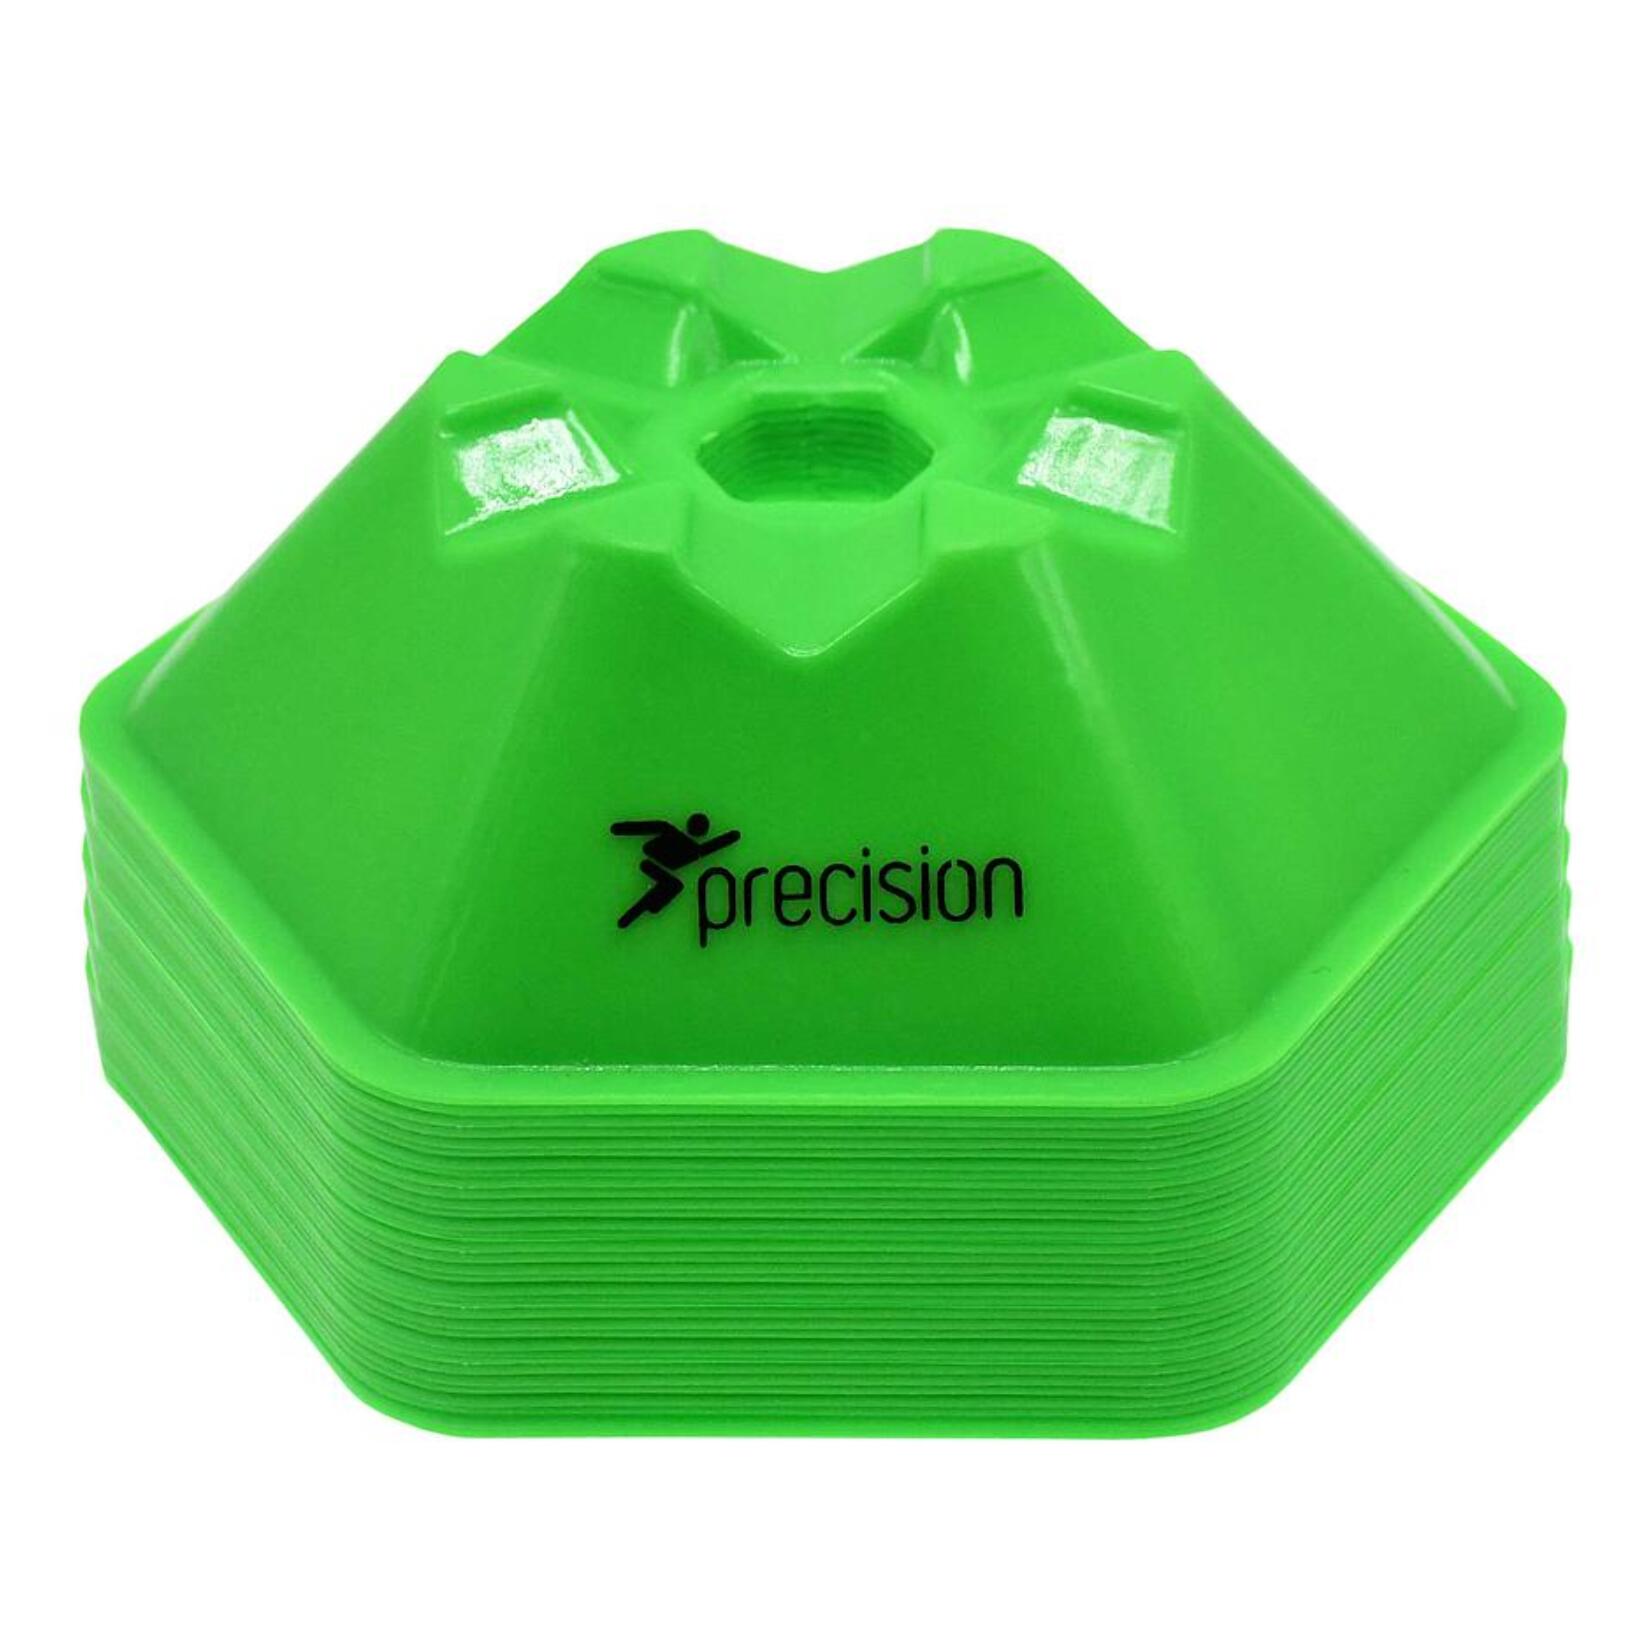 Precision Pro HX Saucer Cones - Set of 50 (Assorted) Fluo Green